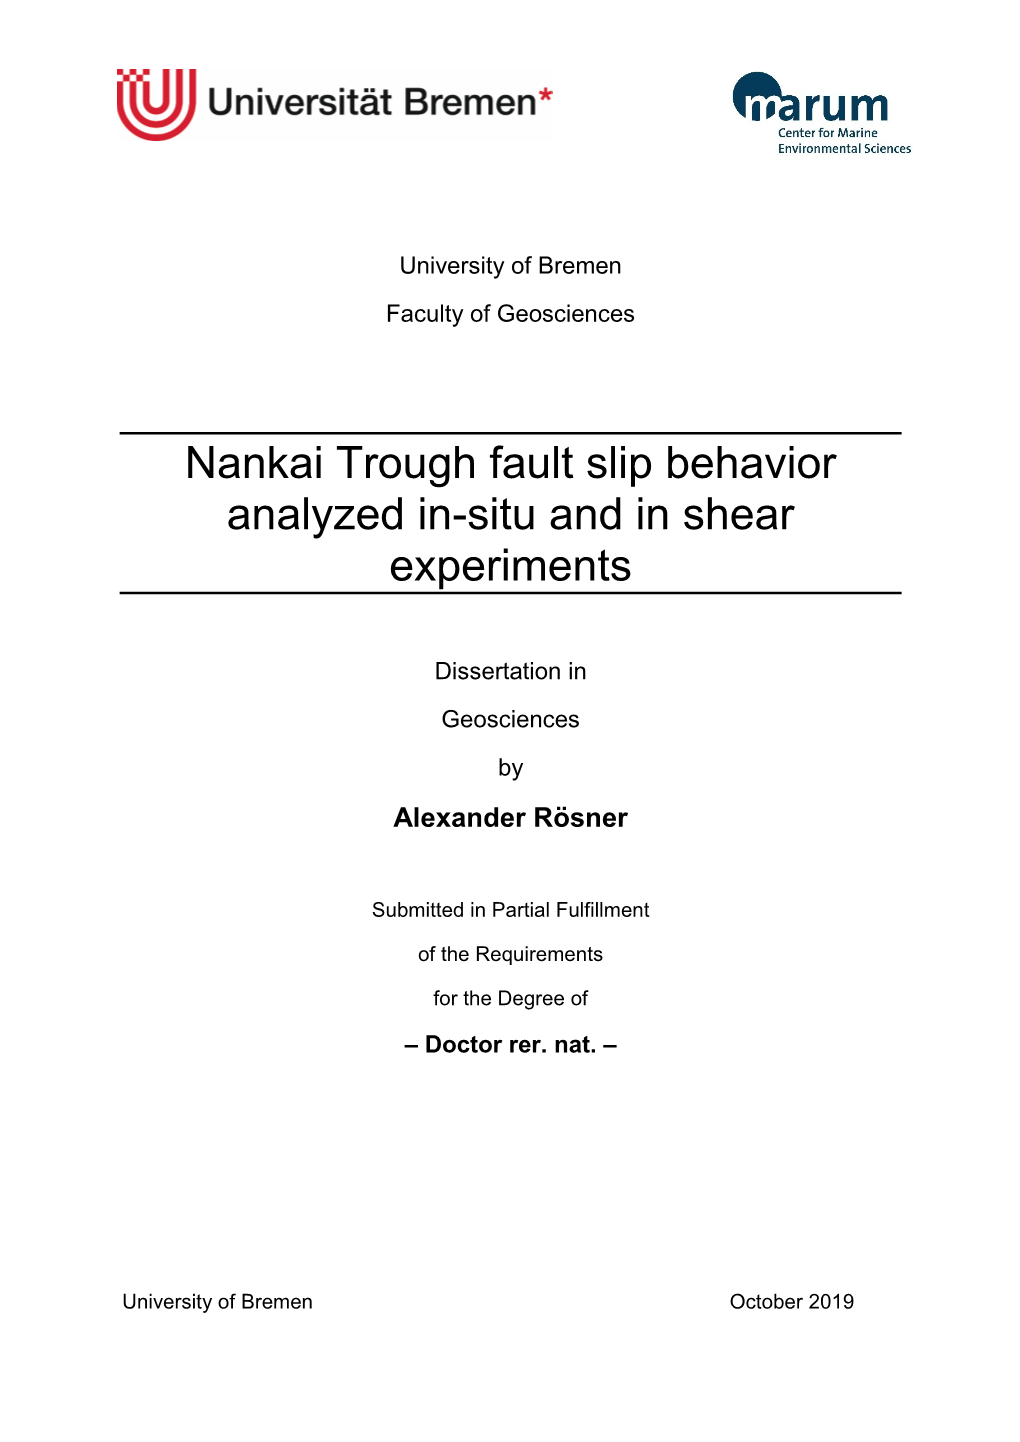 Nankai Trough Fault Slip Behavior Analyzed In-Situ and in Shear Experiments